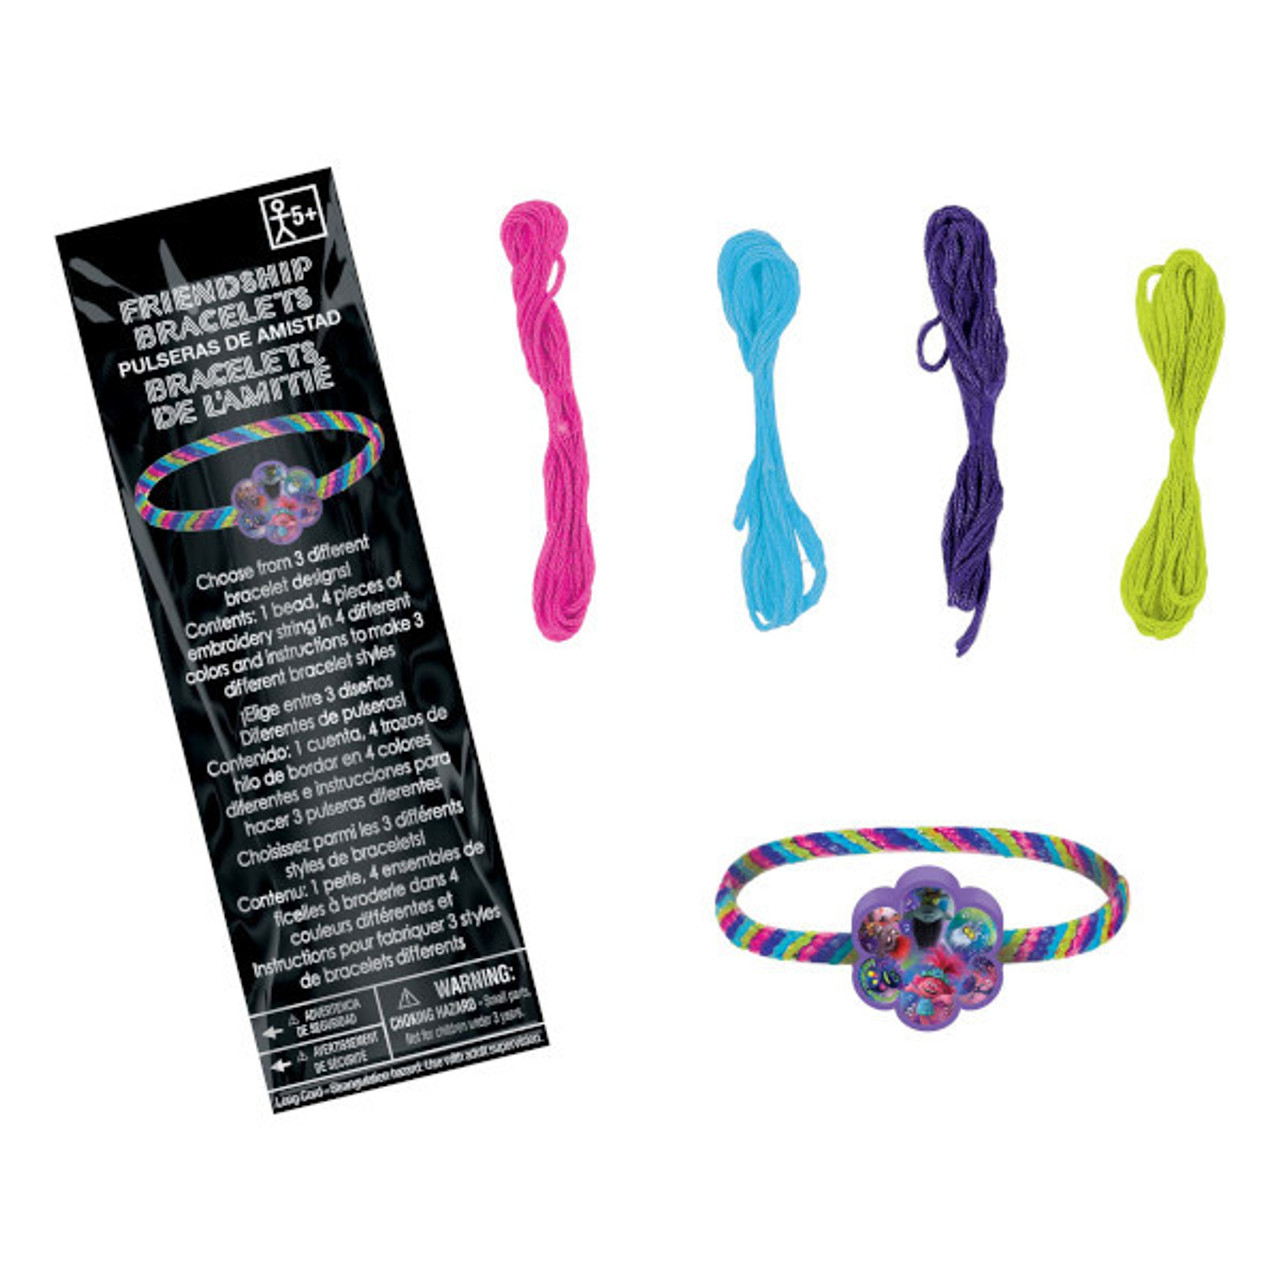 Trolls World Tour Friendship Bracelet Kits - Party Time, Inc.